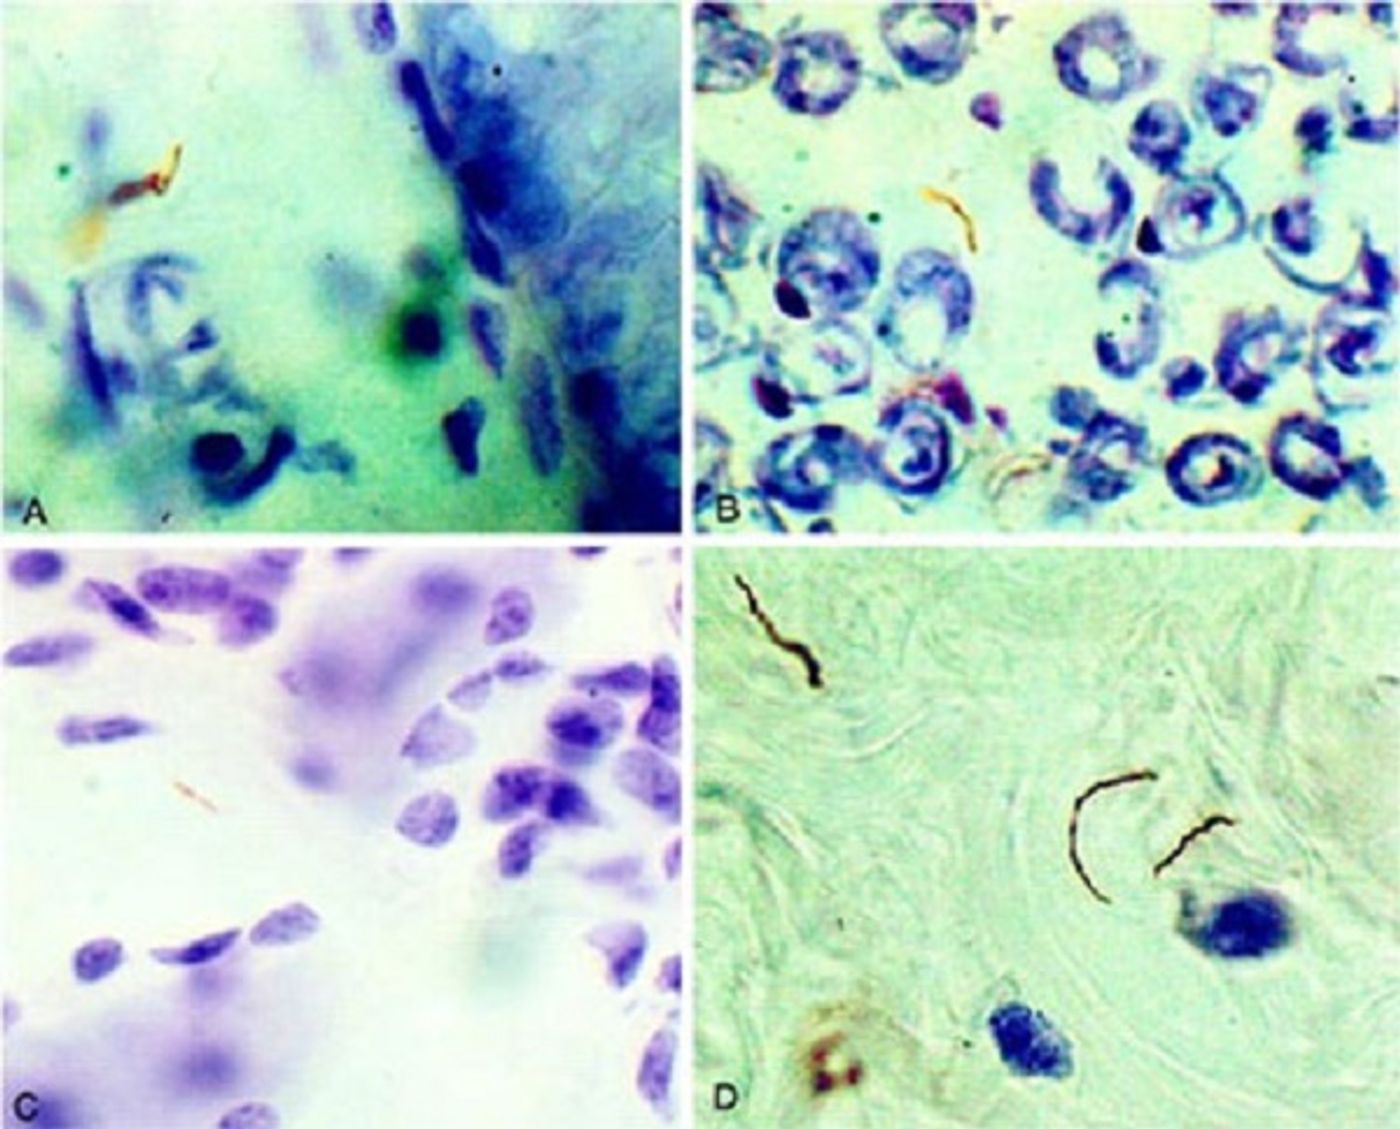 Microscopic images of Borrelia burgdorferi